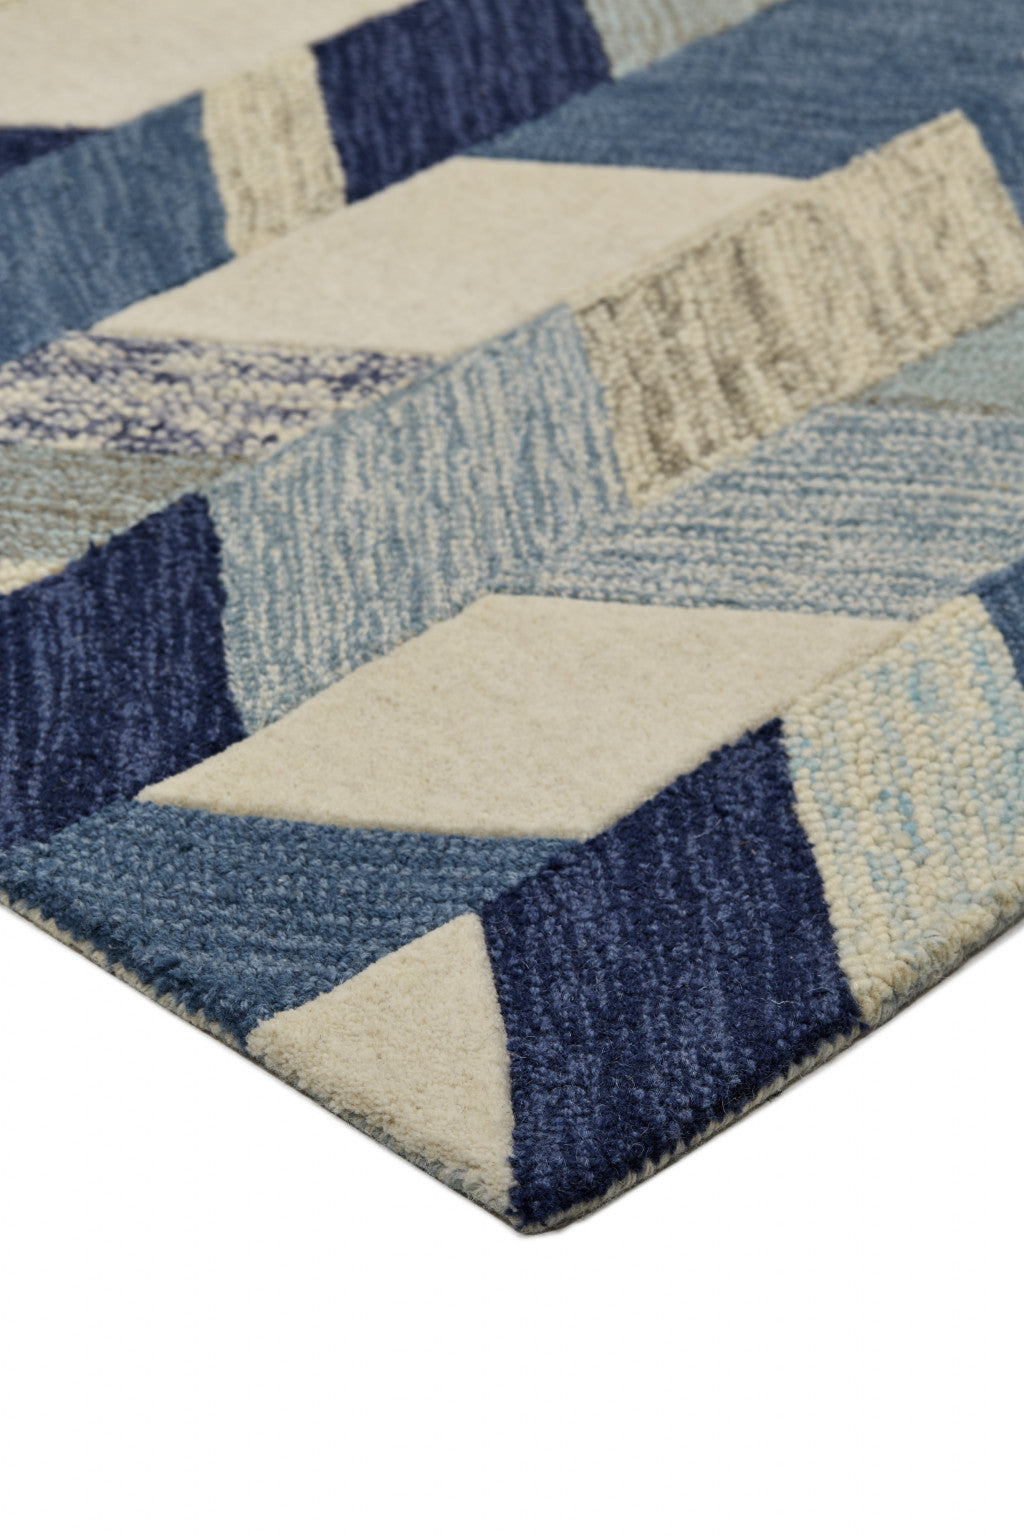 Blue Ivory And Gray Wool Geometric Tufted Handmade Area Rug - 4' x 6'